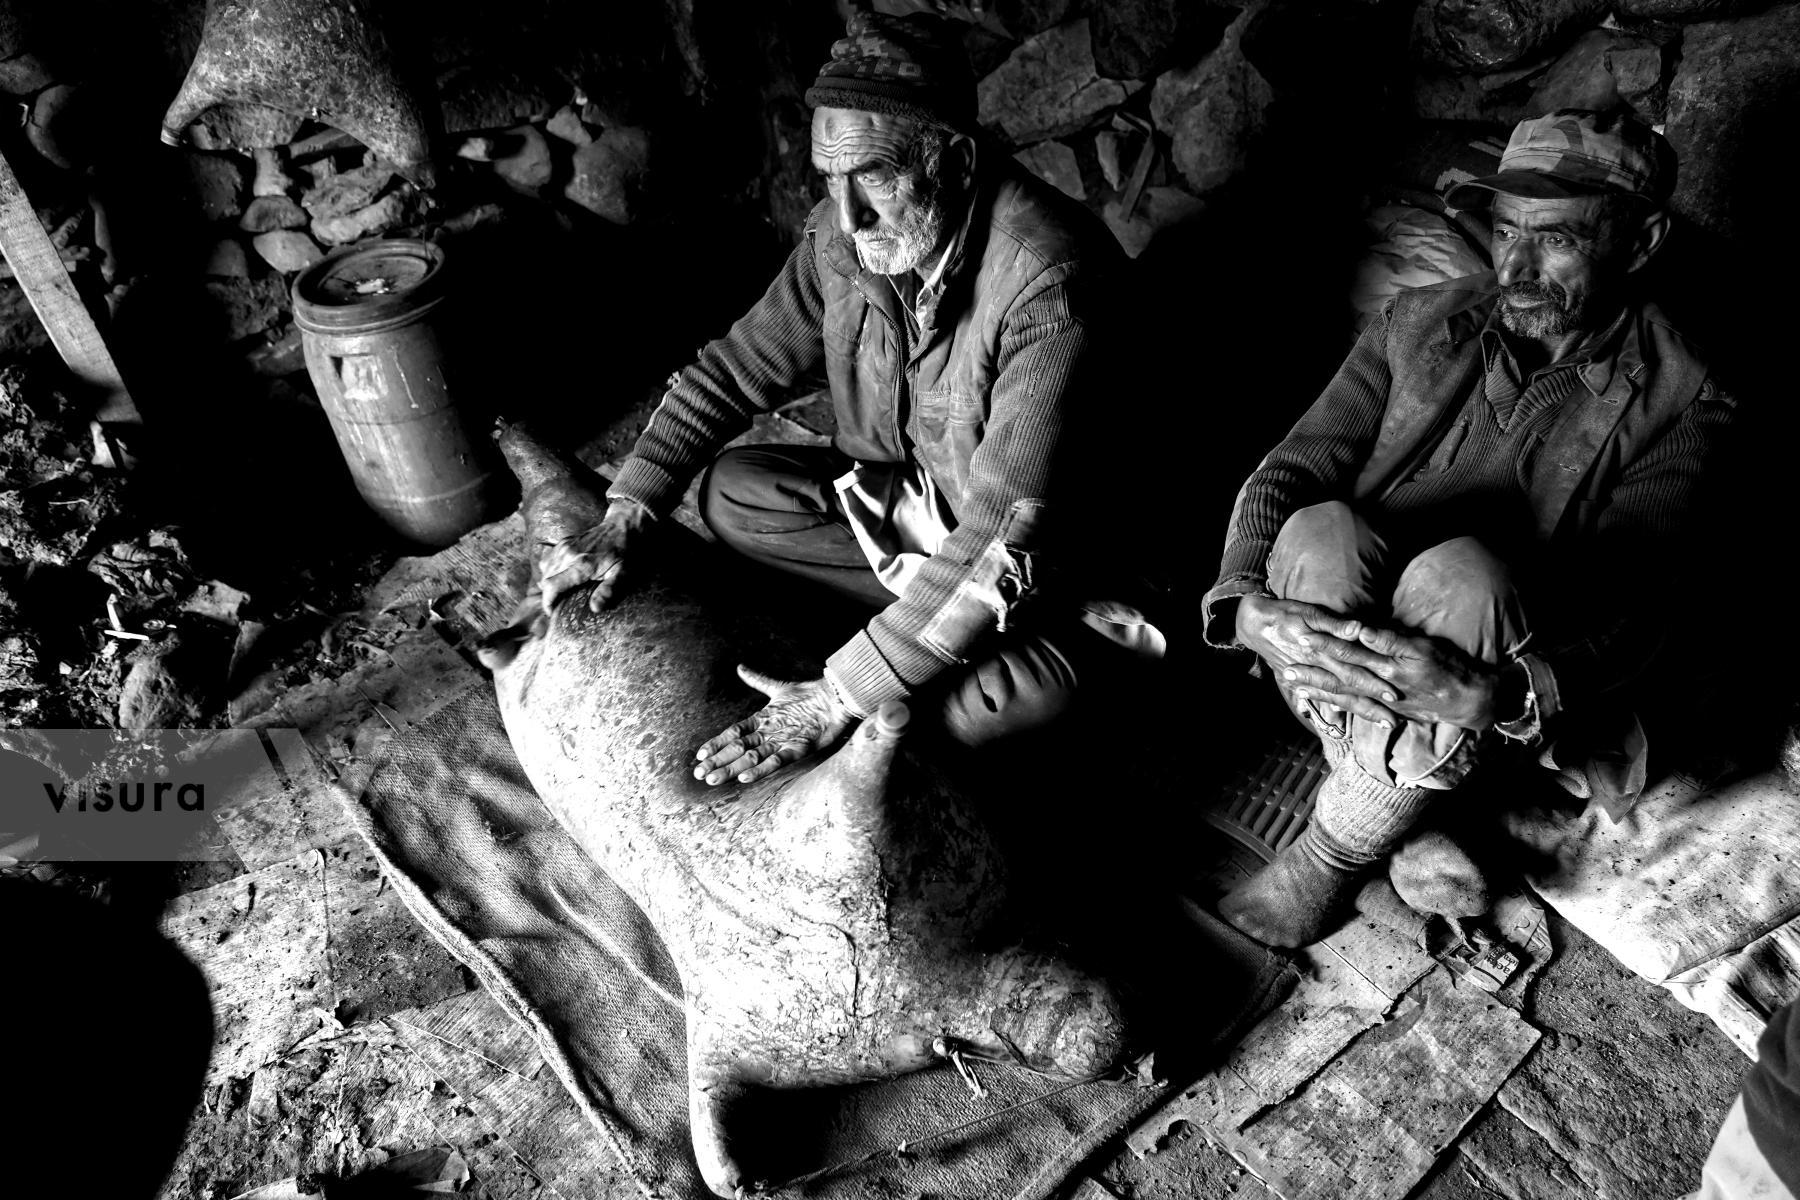 Purchase Shepherd making butter by Andrea Gabrieli